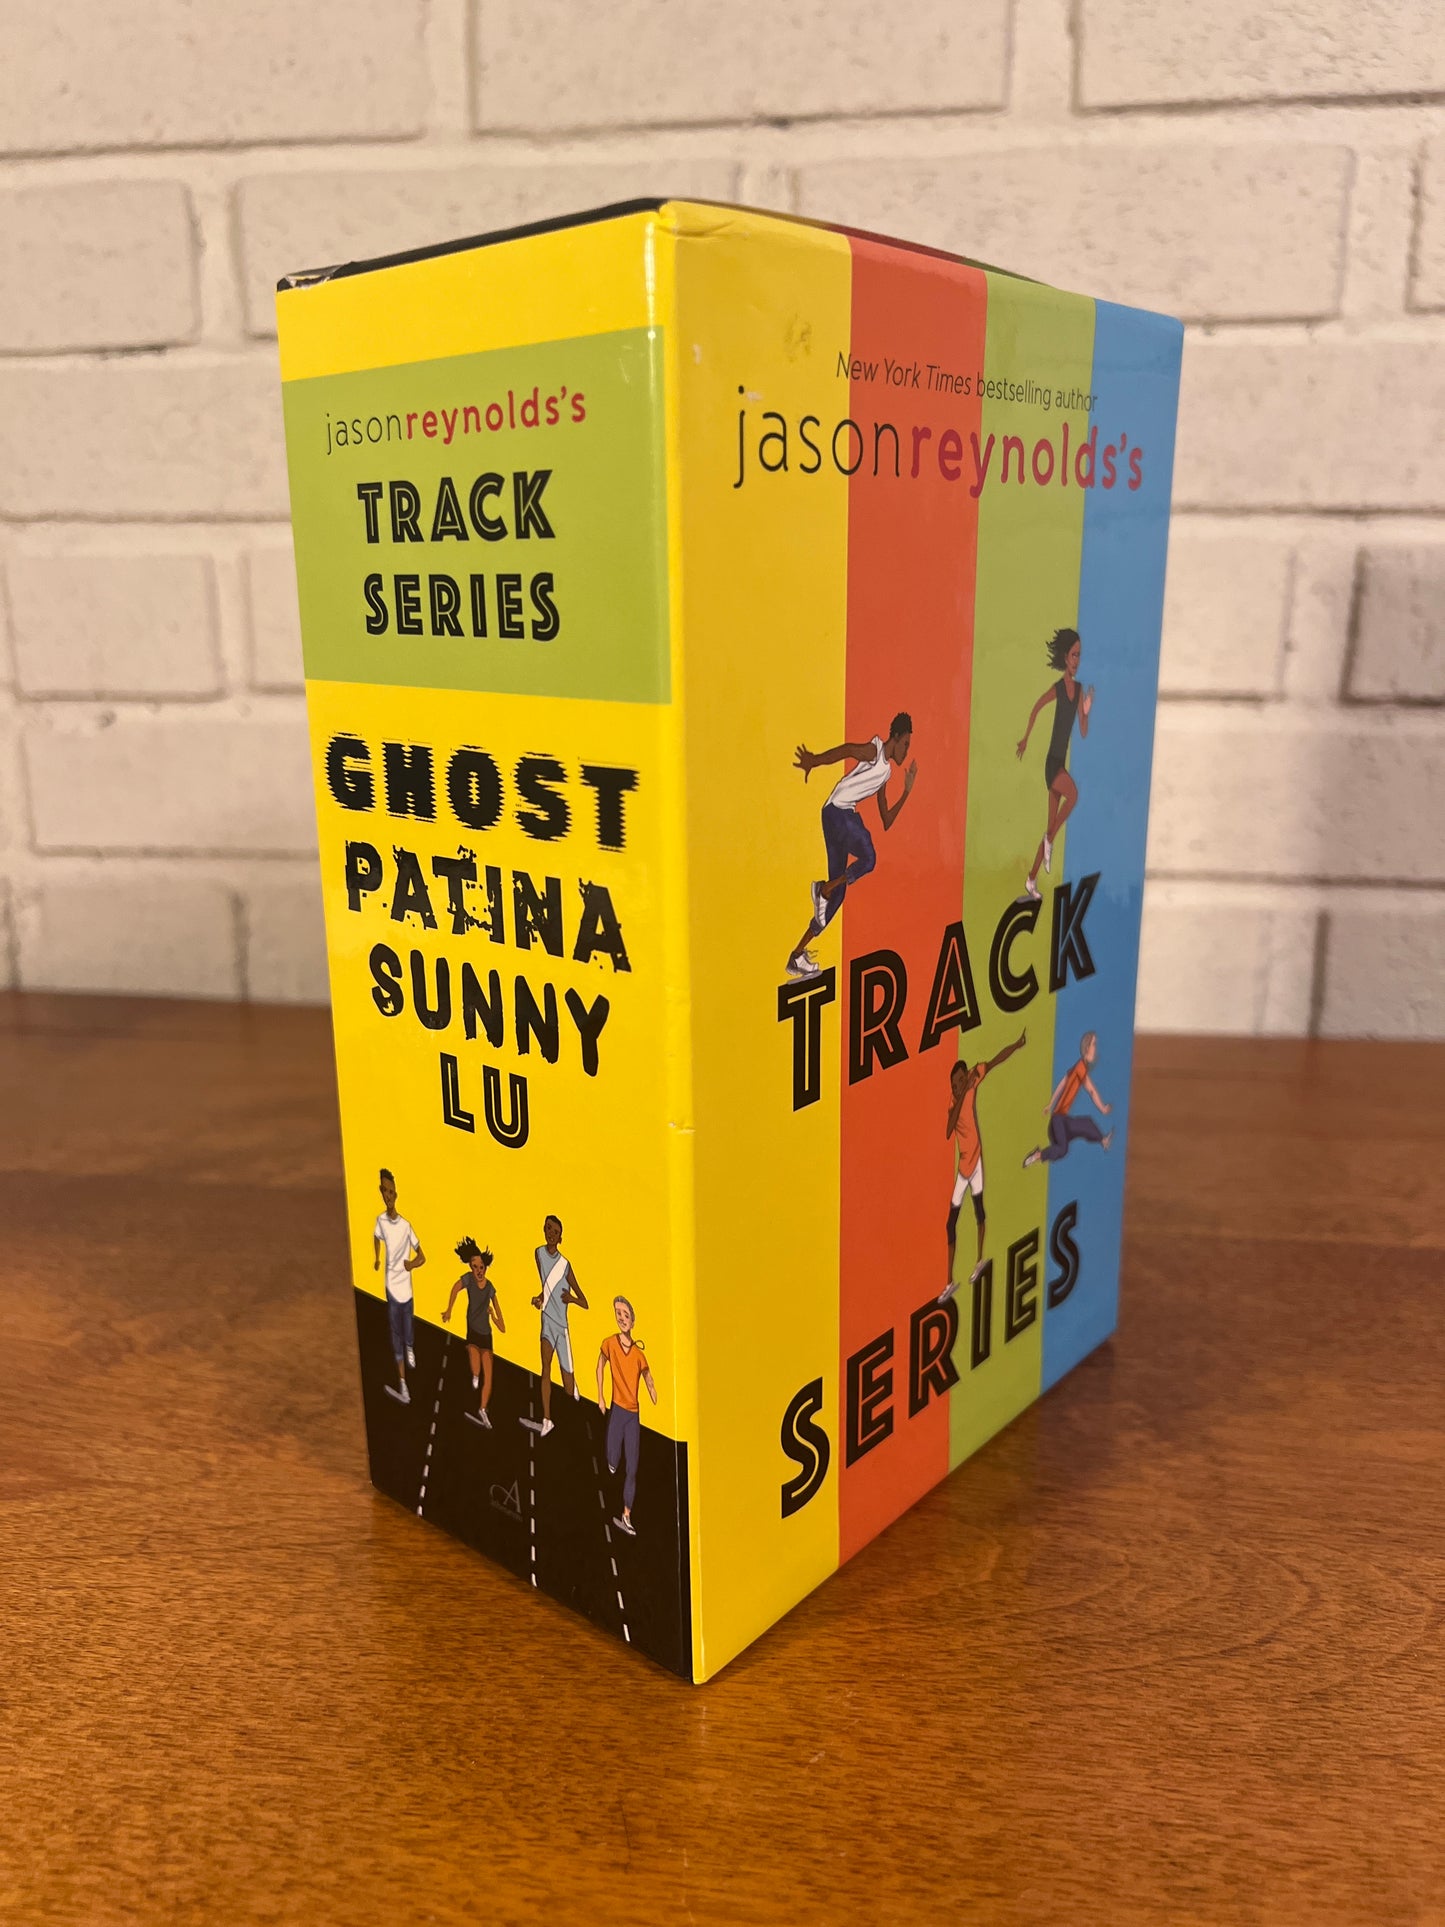 Track Series by Jason Reynolds - Ghost, Patina, Sunny & Lu [Box Set]